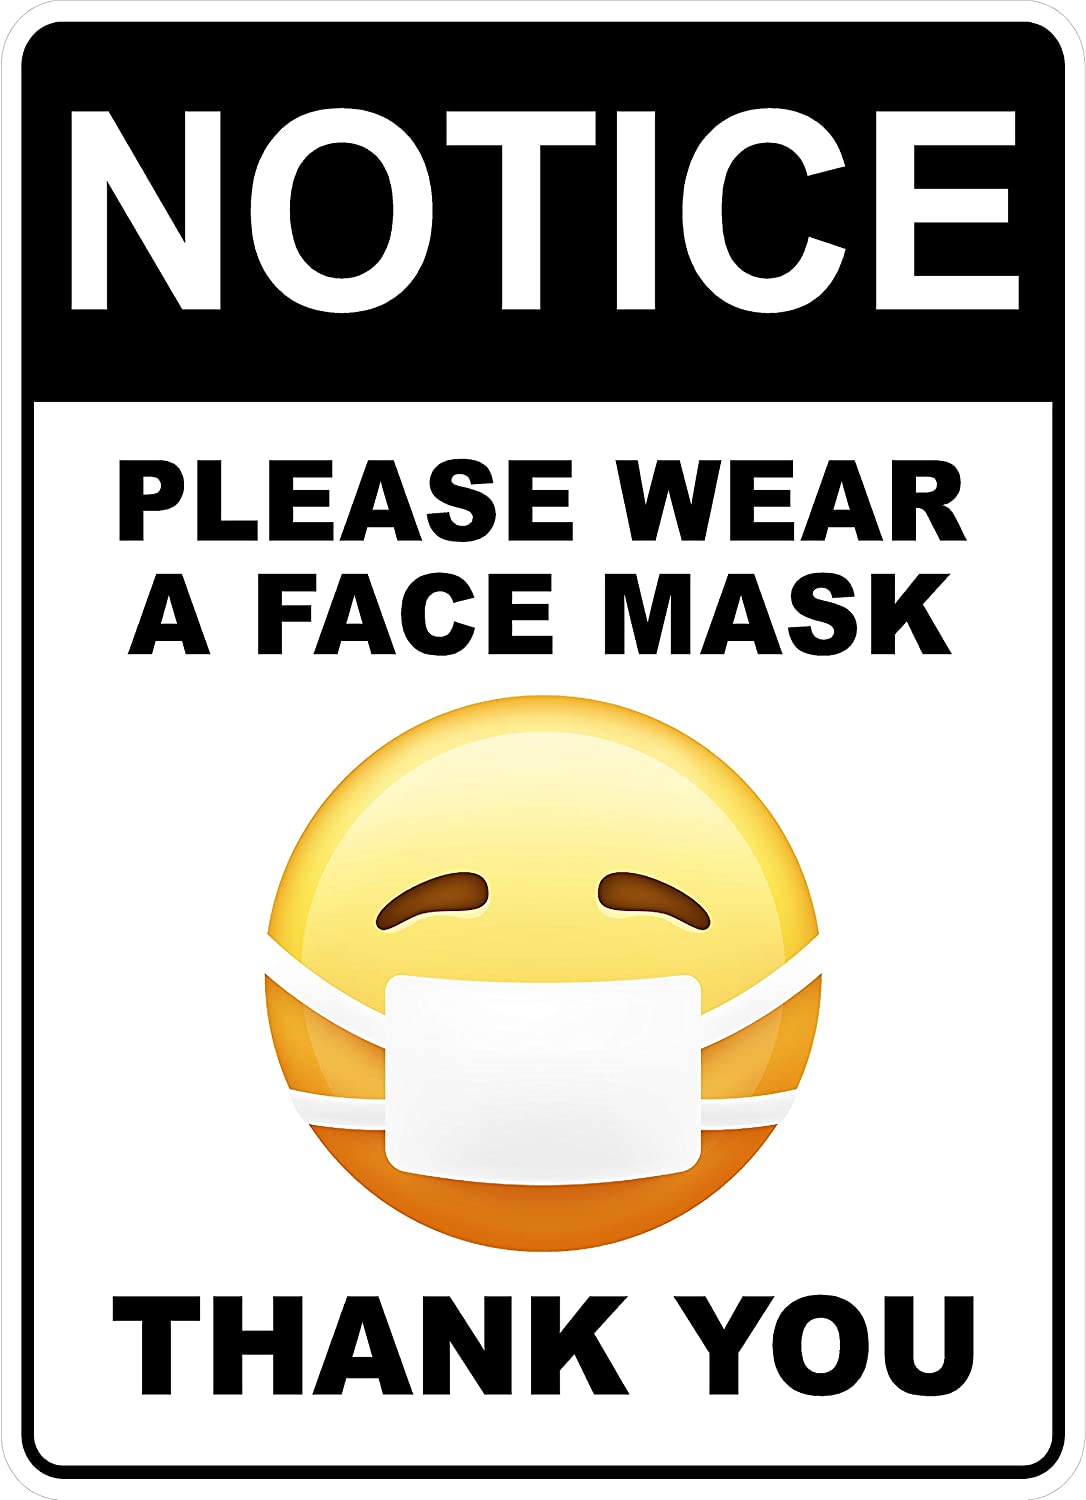 A face mask signage